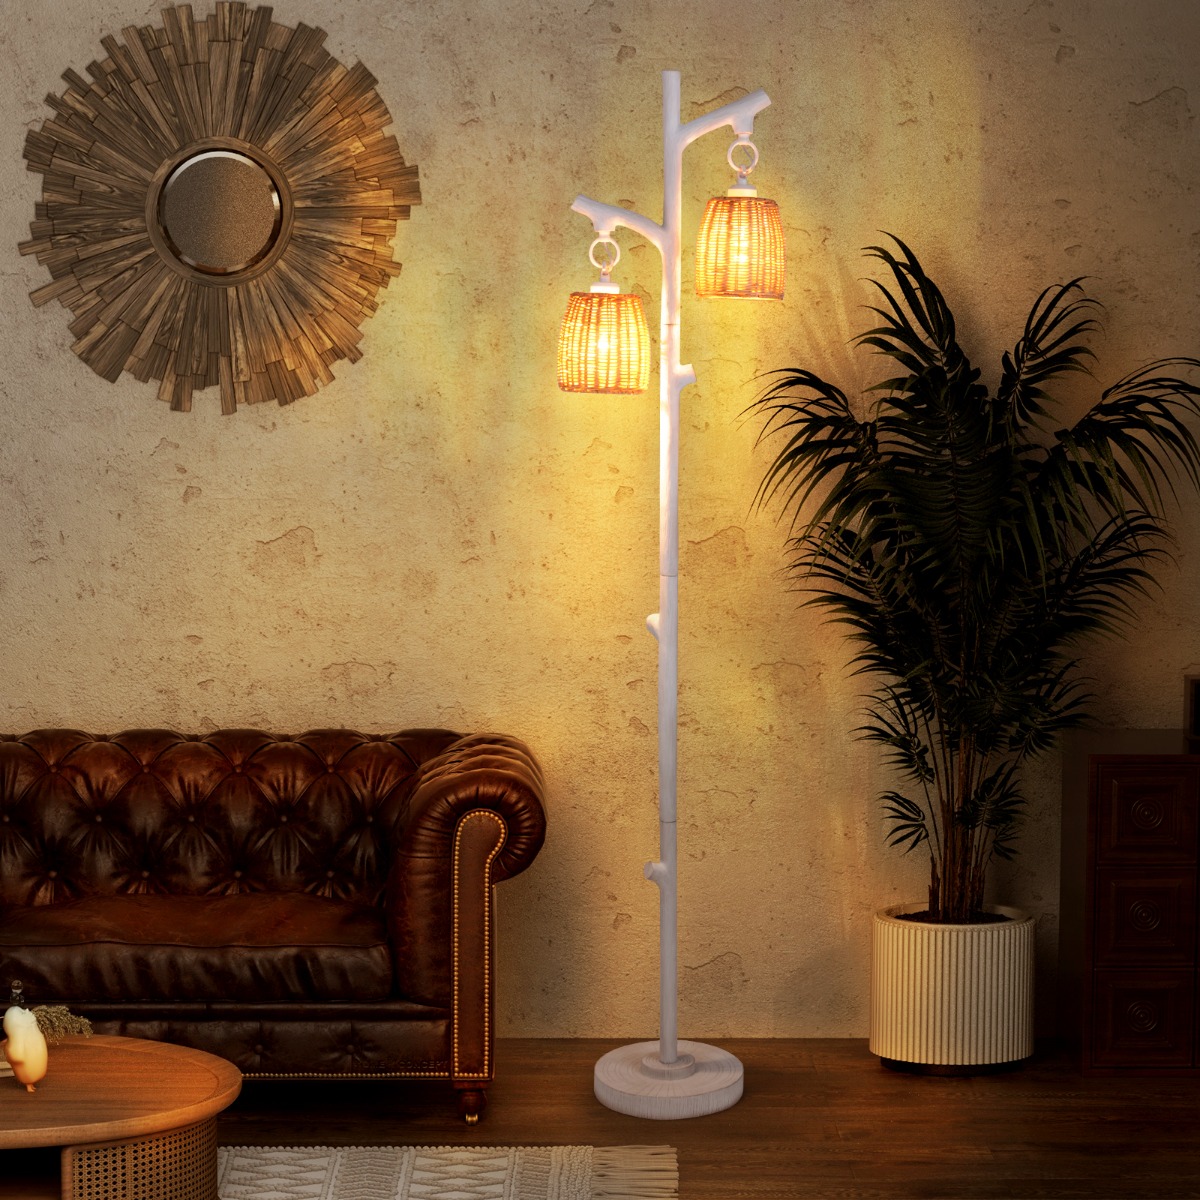 165cm Vloerlamp Dimbaar Vloerlamp met 2 Rieten Lampenkappen Vloerlamp Wit voor Woonkamer Slaapkamer 